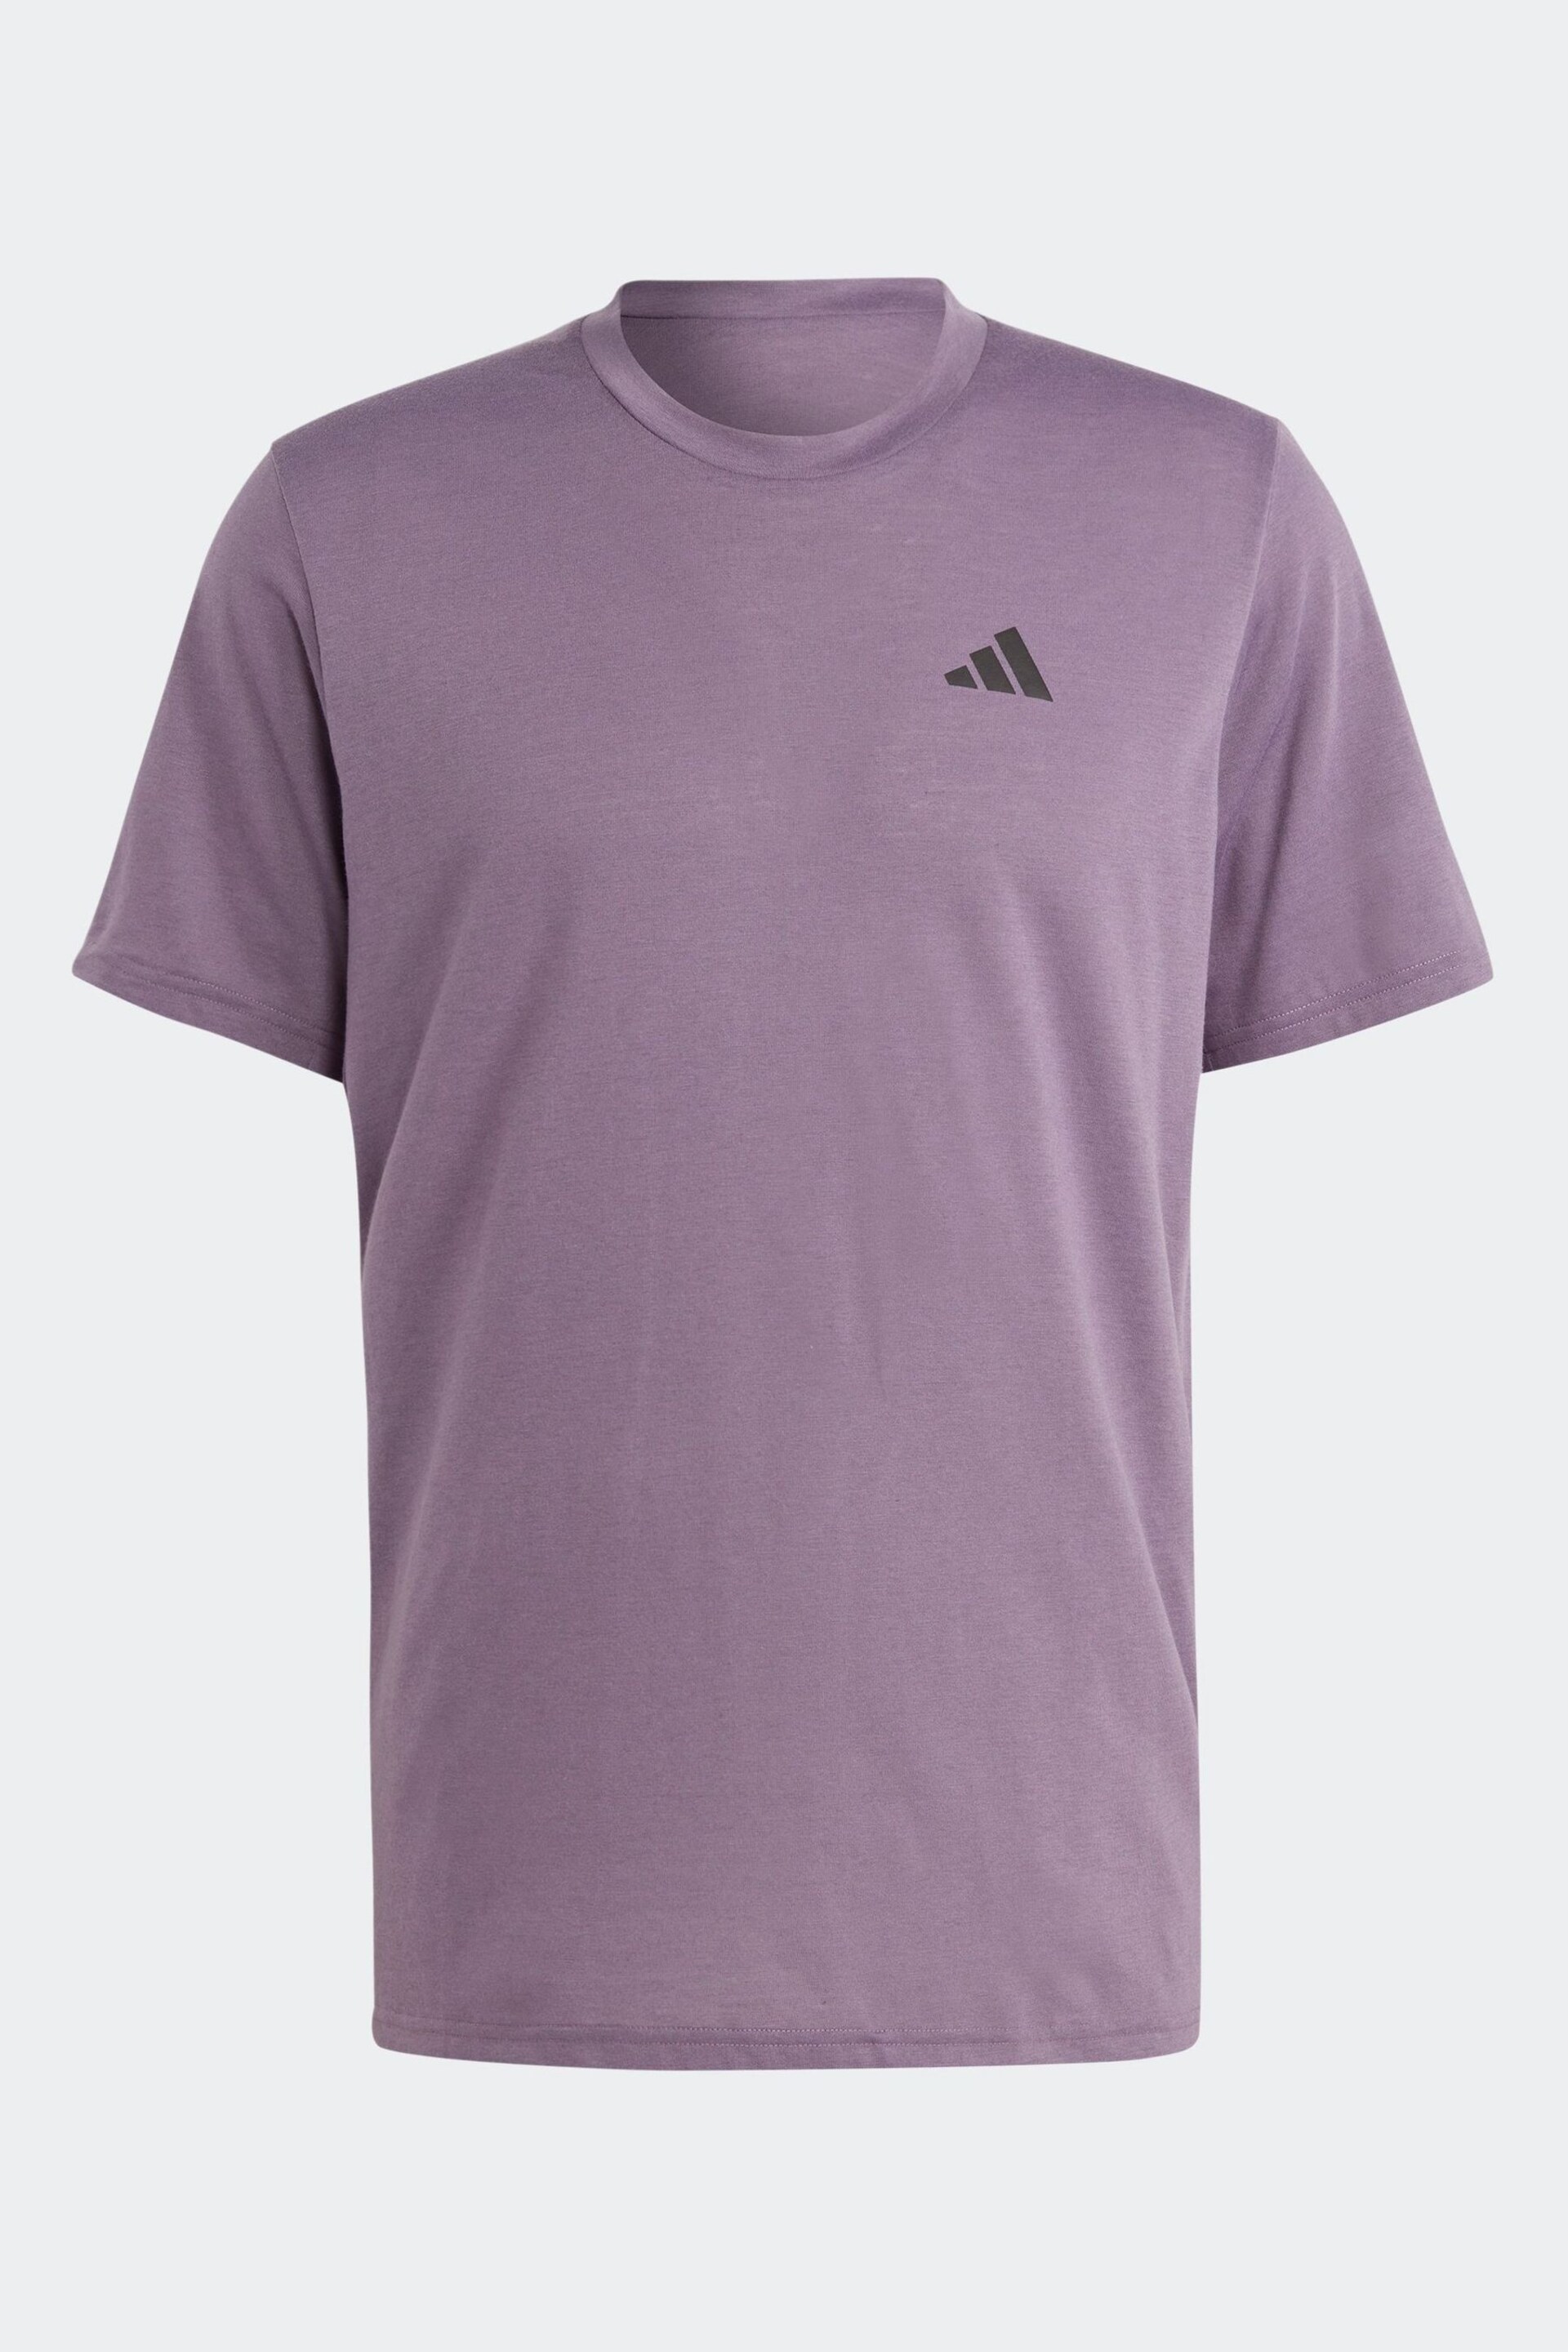 adidas Purple Train Essentials Feelready Training T-Shirt - Image 6 of 6